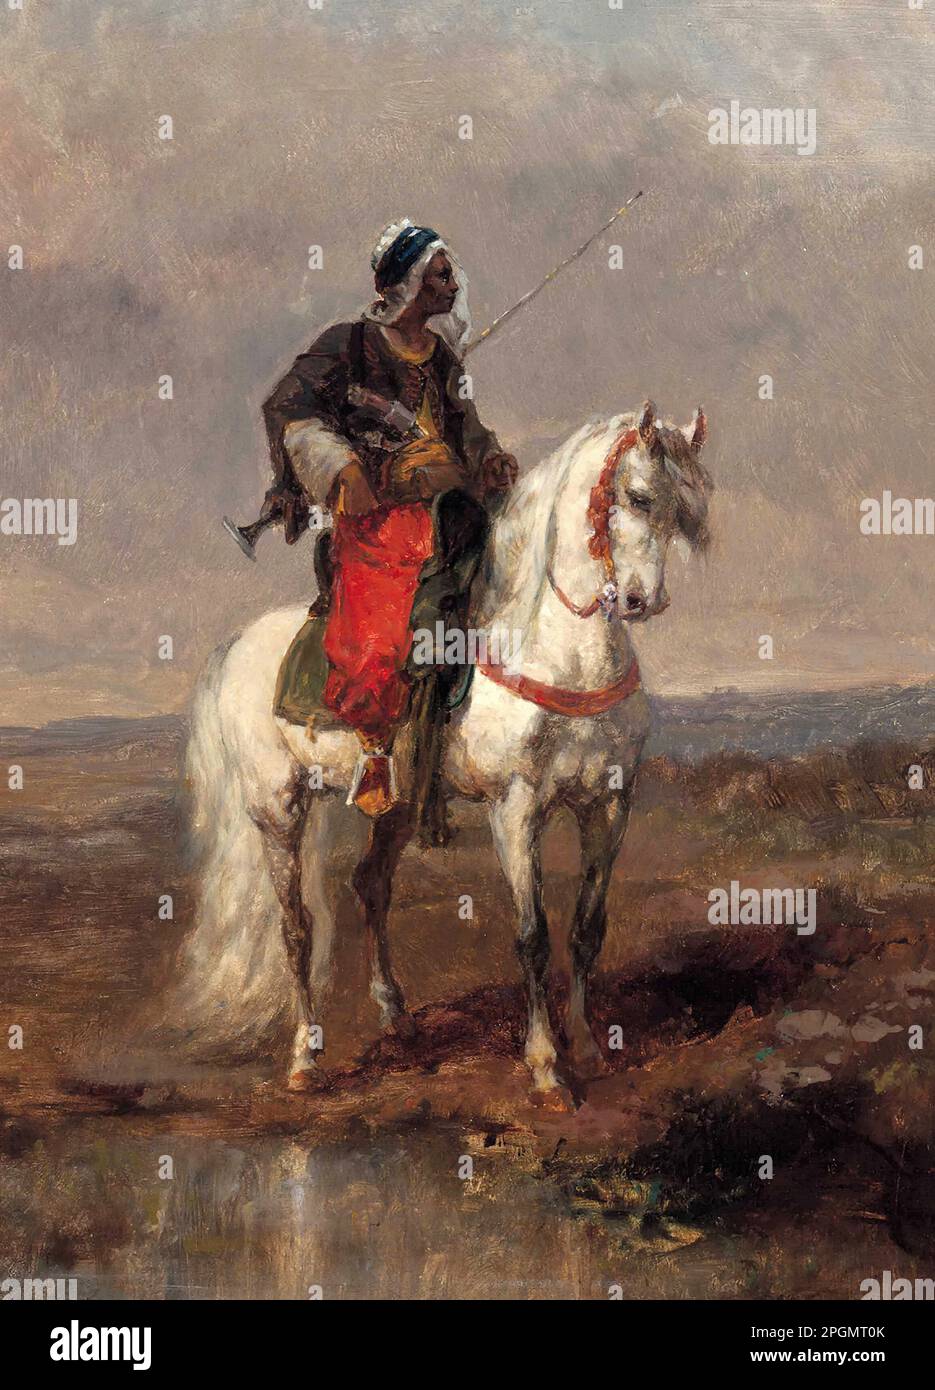 Schreyer Adolf - an Arab Horseman - German School - 19th Century - Schreyer Adolf - an Arab Horseman - German School - 19th  Century Stock Photo